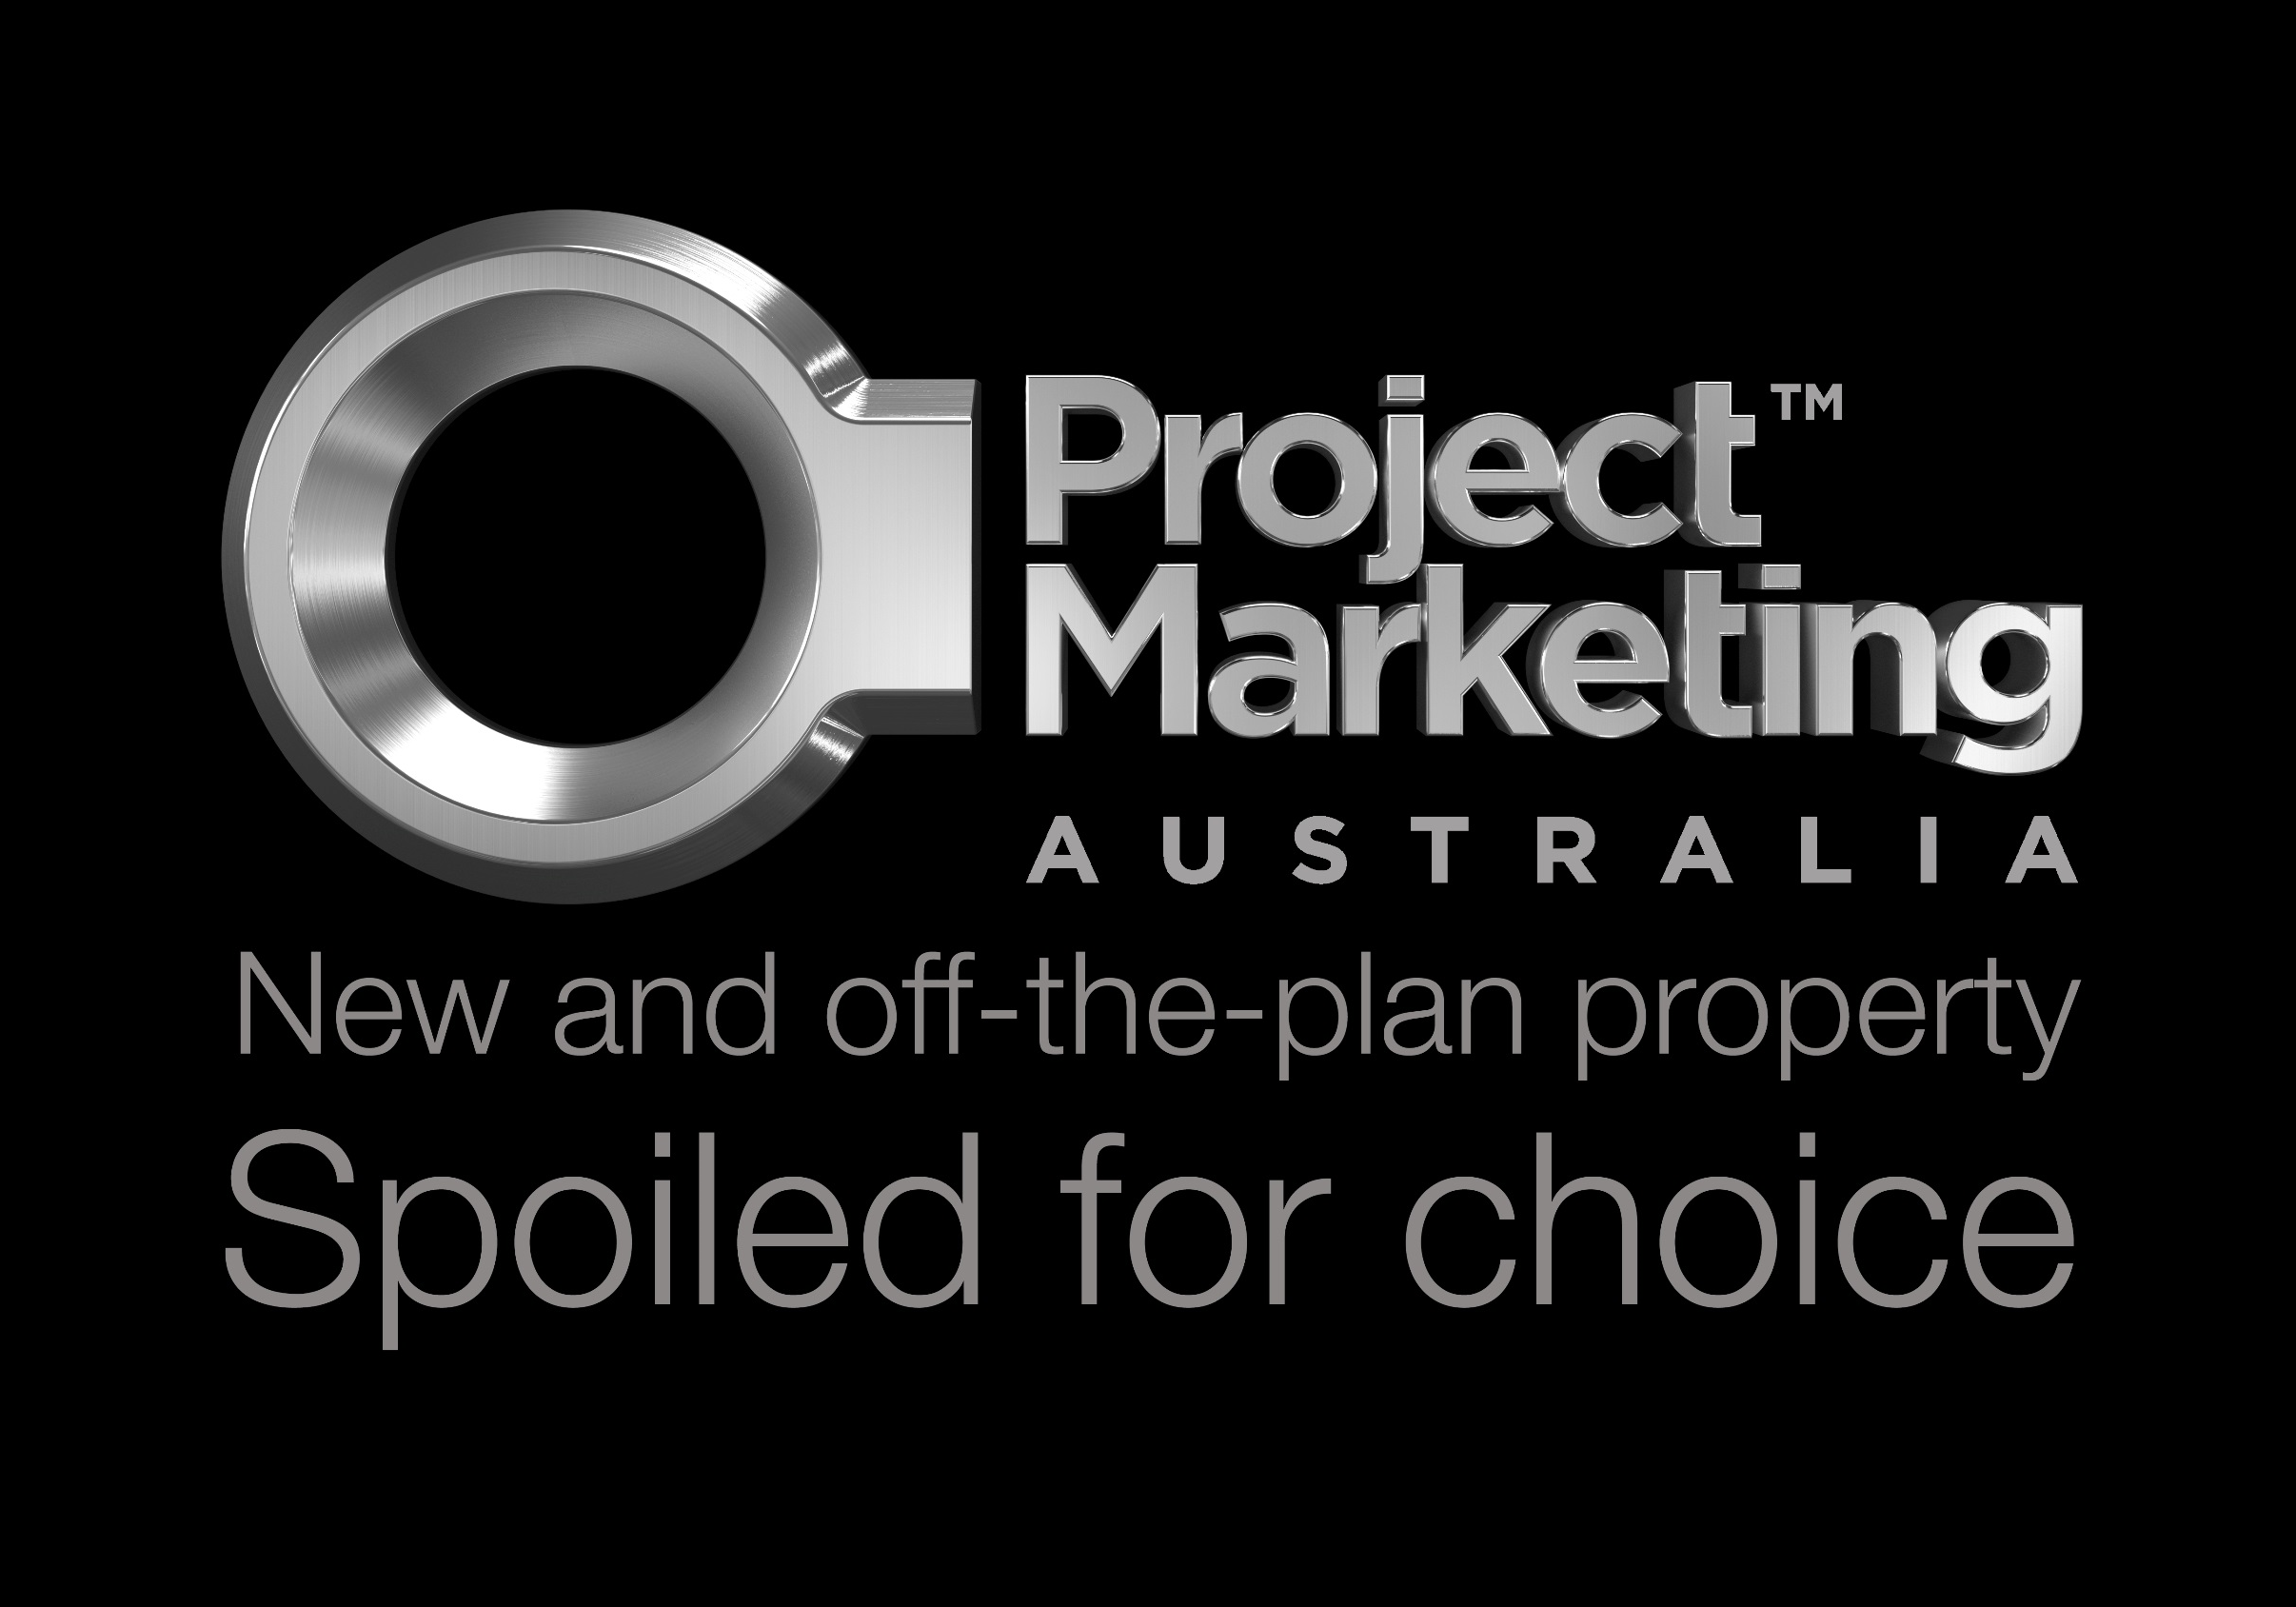 Project Marketing Australia